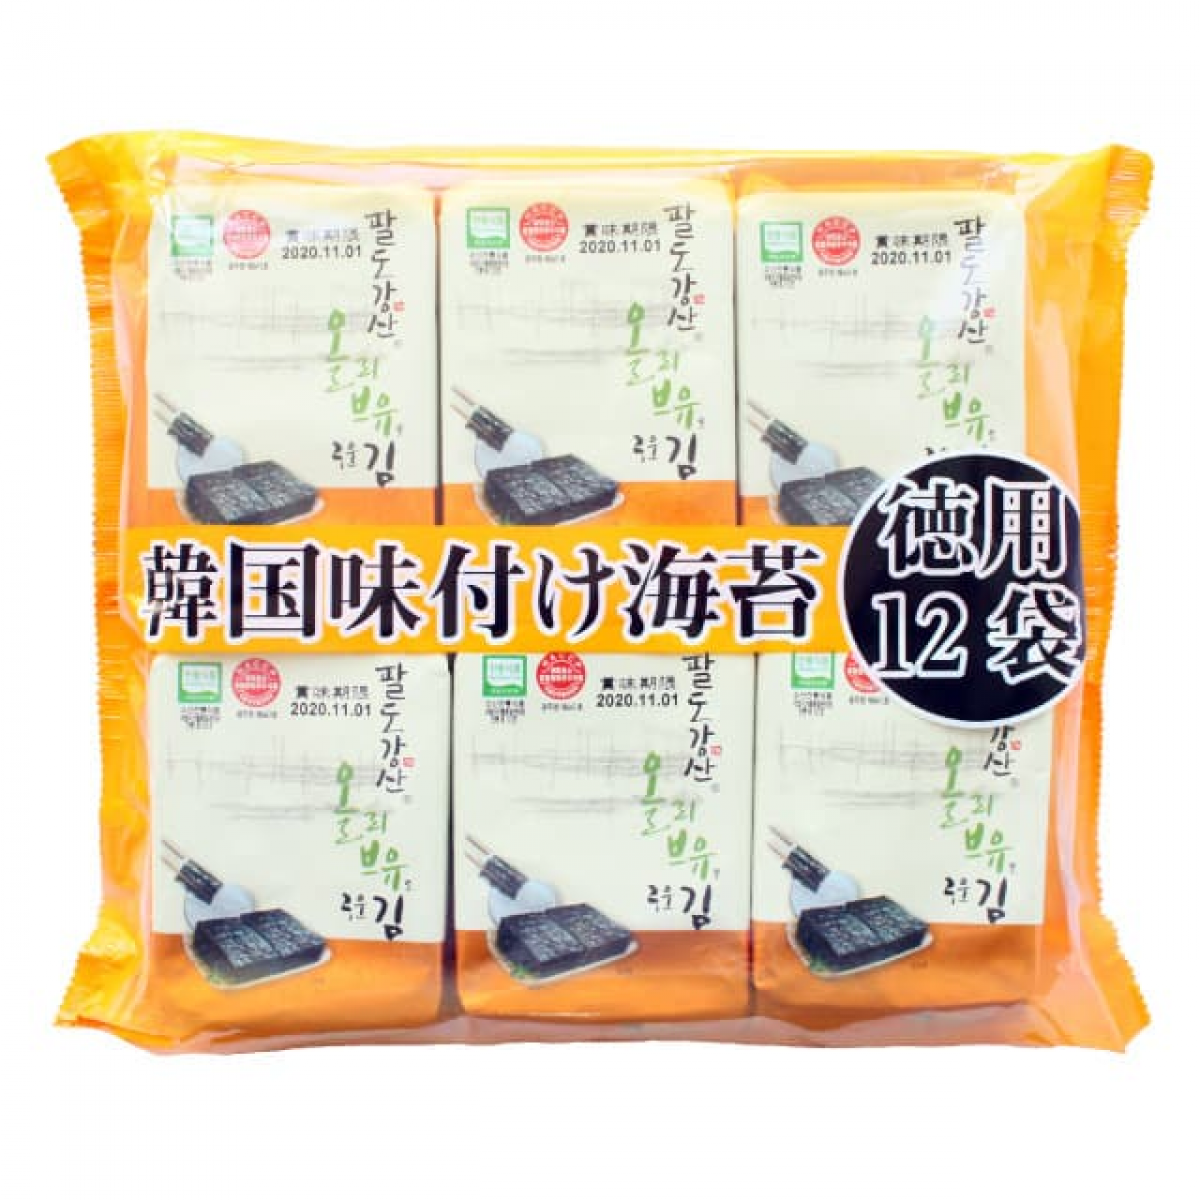 orionjako-韩国麻油风味海苔-12入(48g)